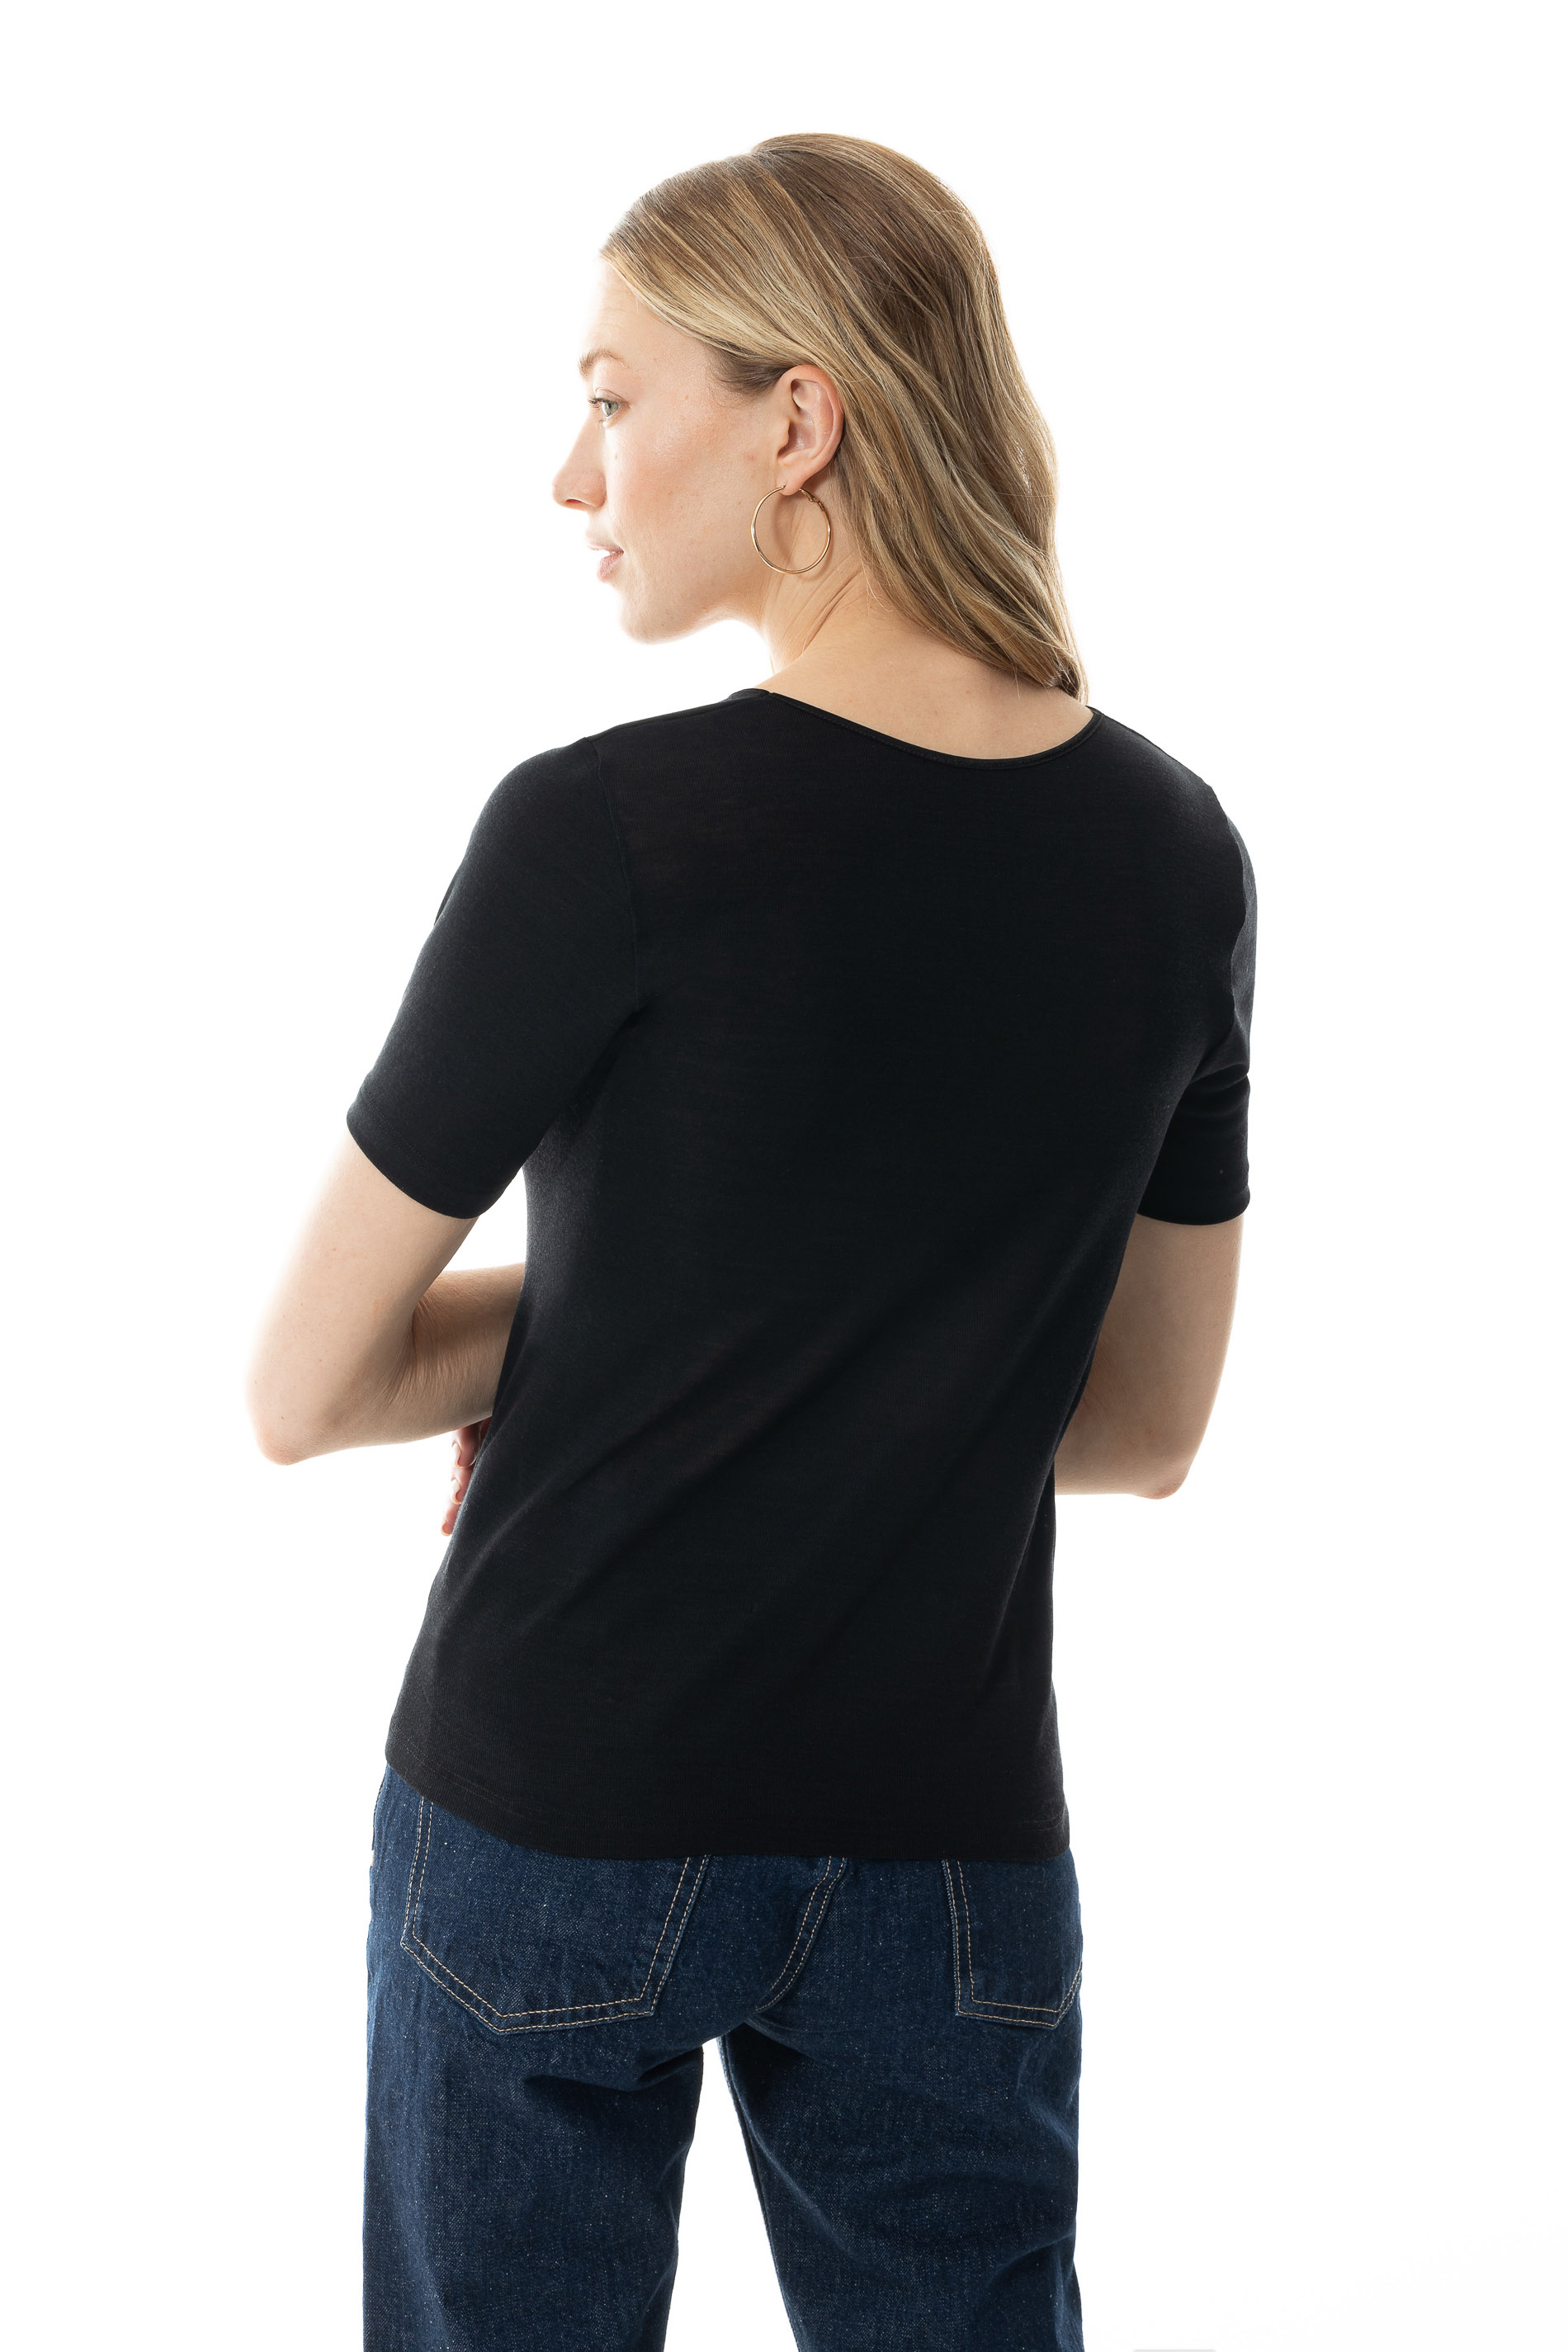 Short-sleeved vest Black Serie Exquisite Rear View | mey®